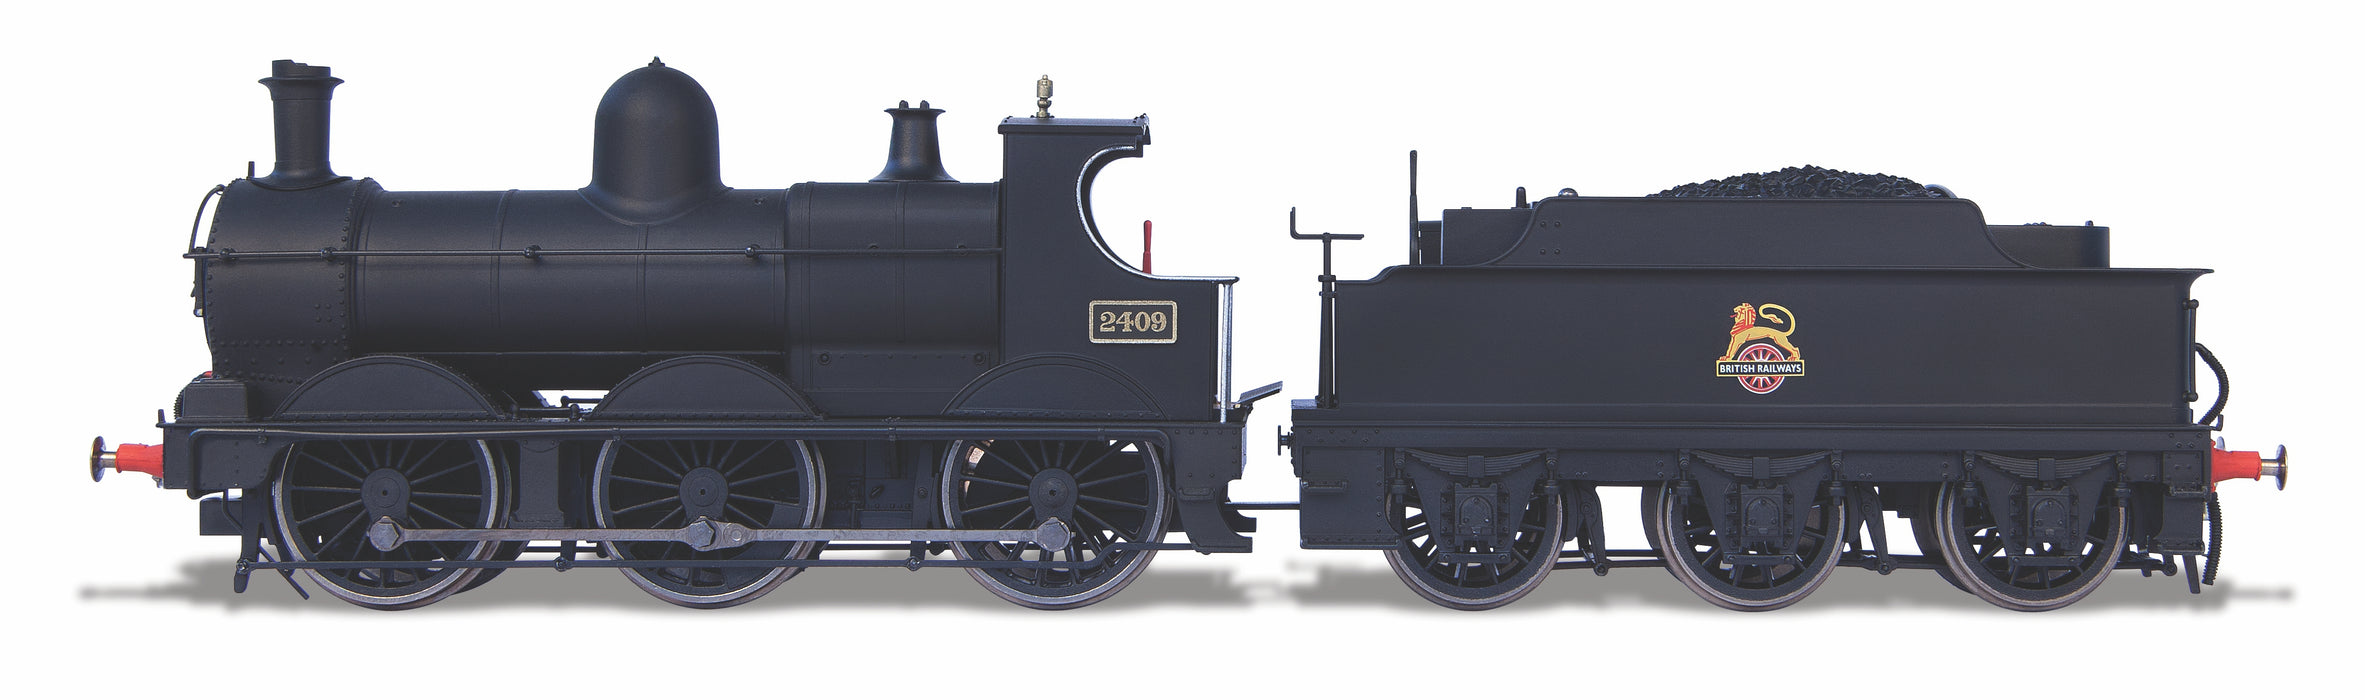 Oxford Rail Dean Goods 2409 Early BR OR76DG002